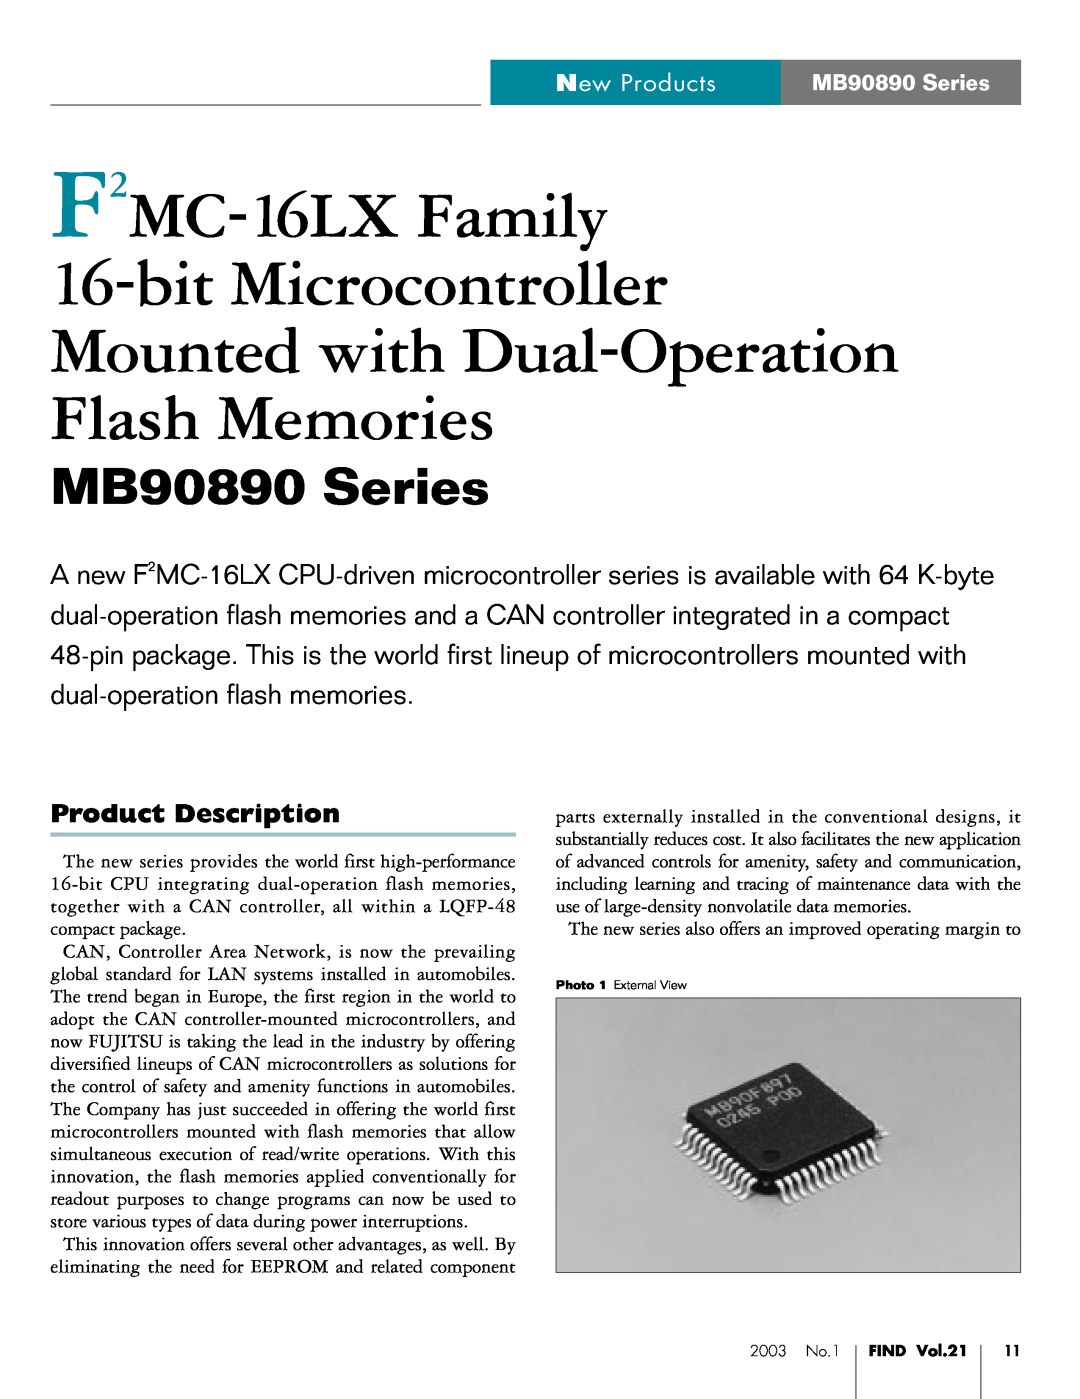 Fujitsu manual Product Description, New Products, MB90890 Series, F2MC-16LX Family 